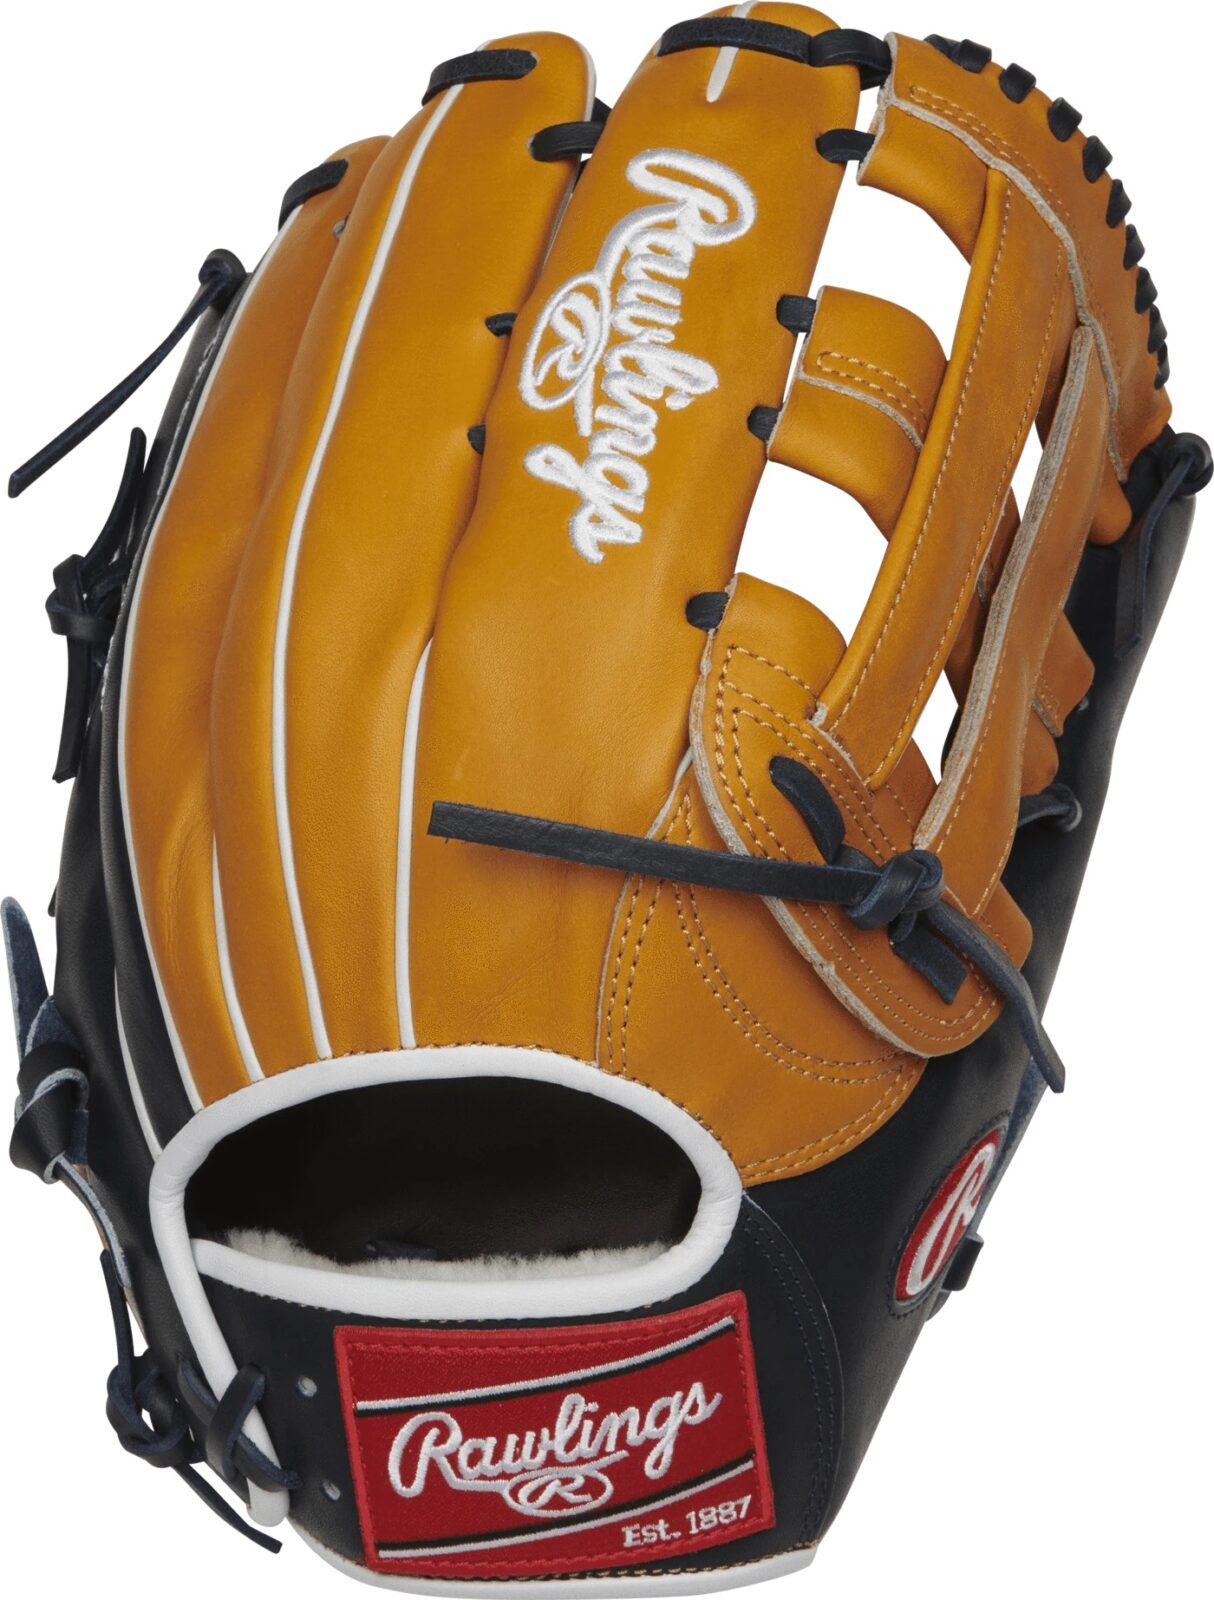 Best Baseball Glove Brand